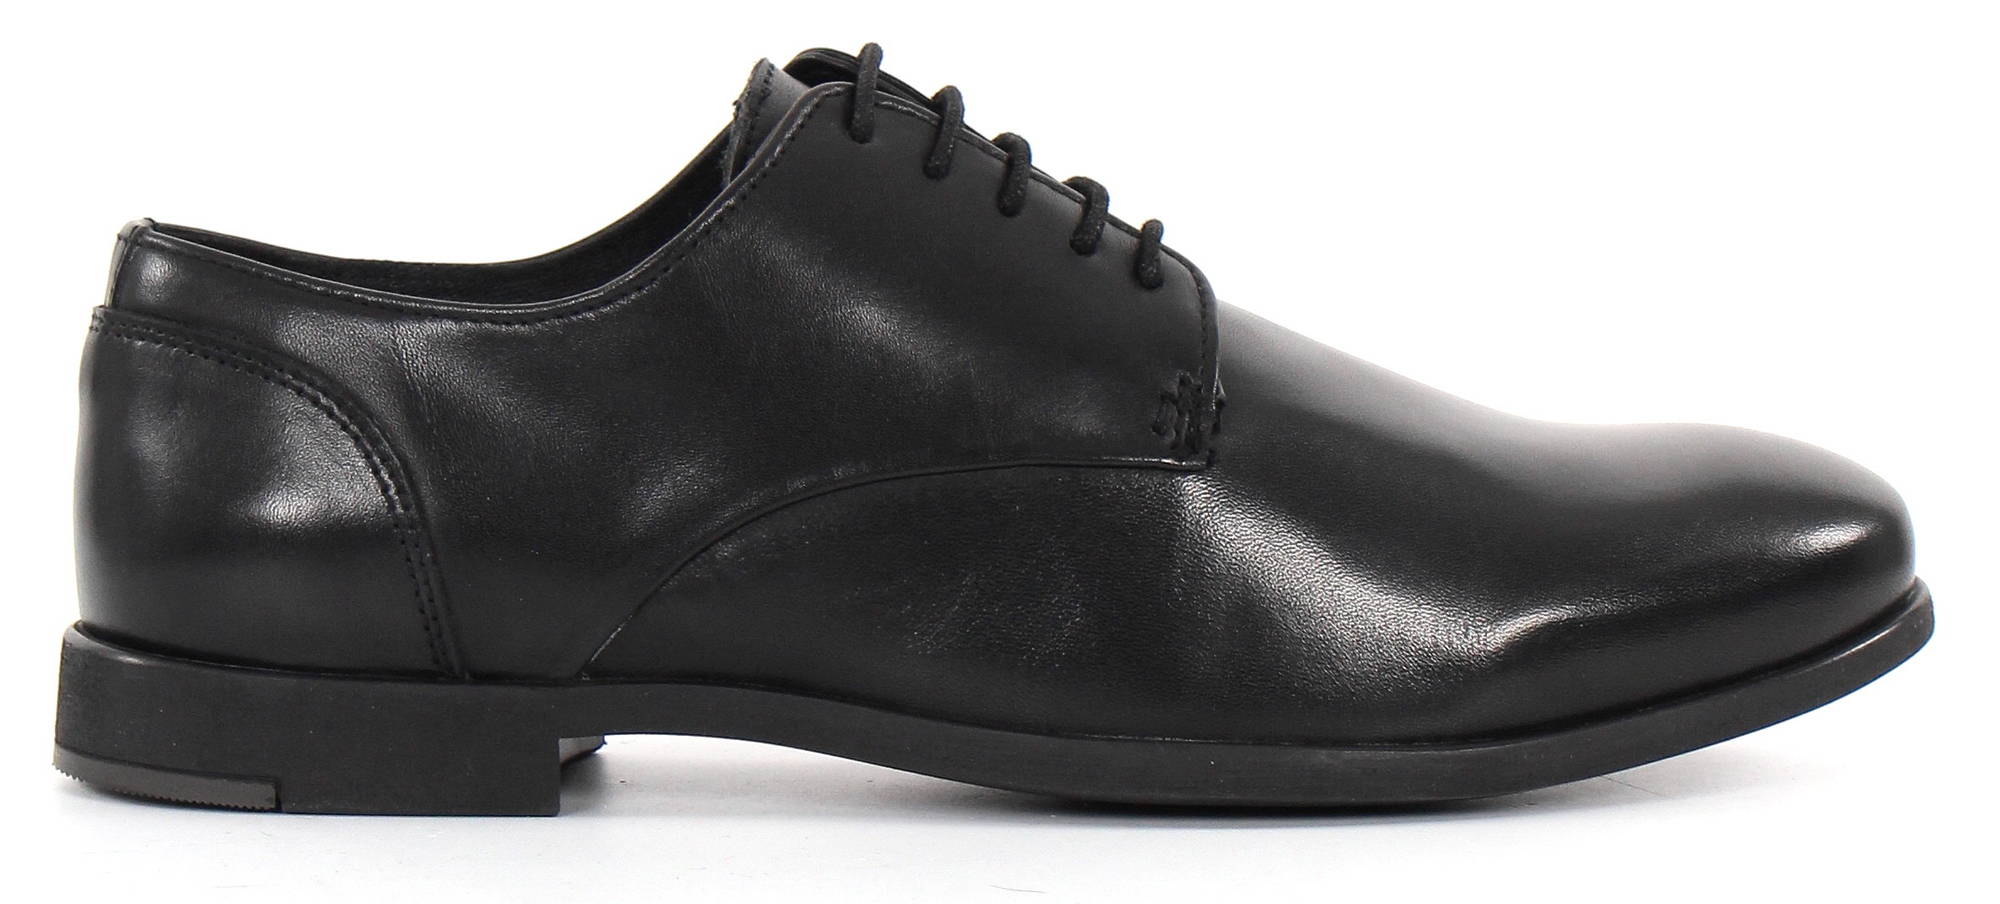 Senator Dress Shoes 451-7175, Black - Stilettoshop.eu webstore